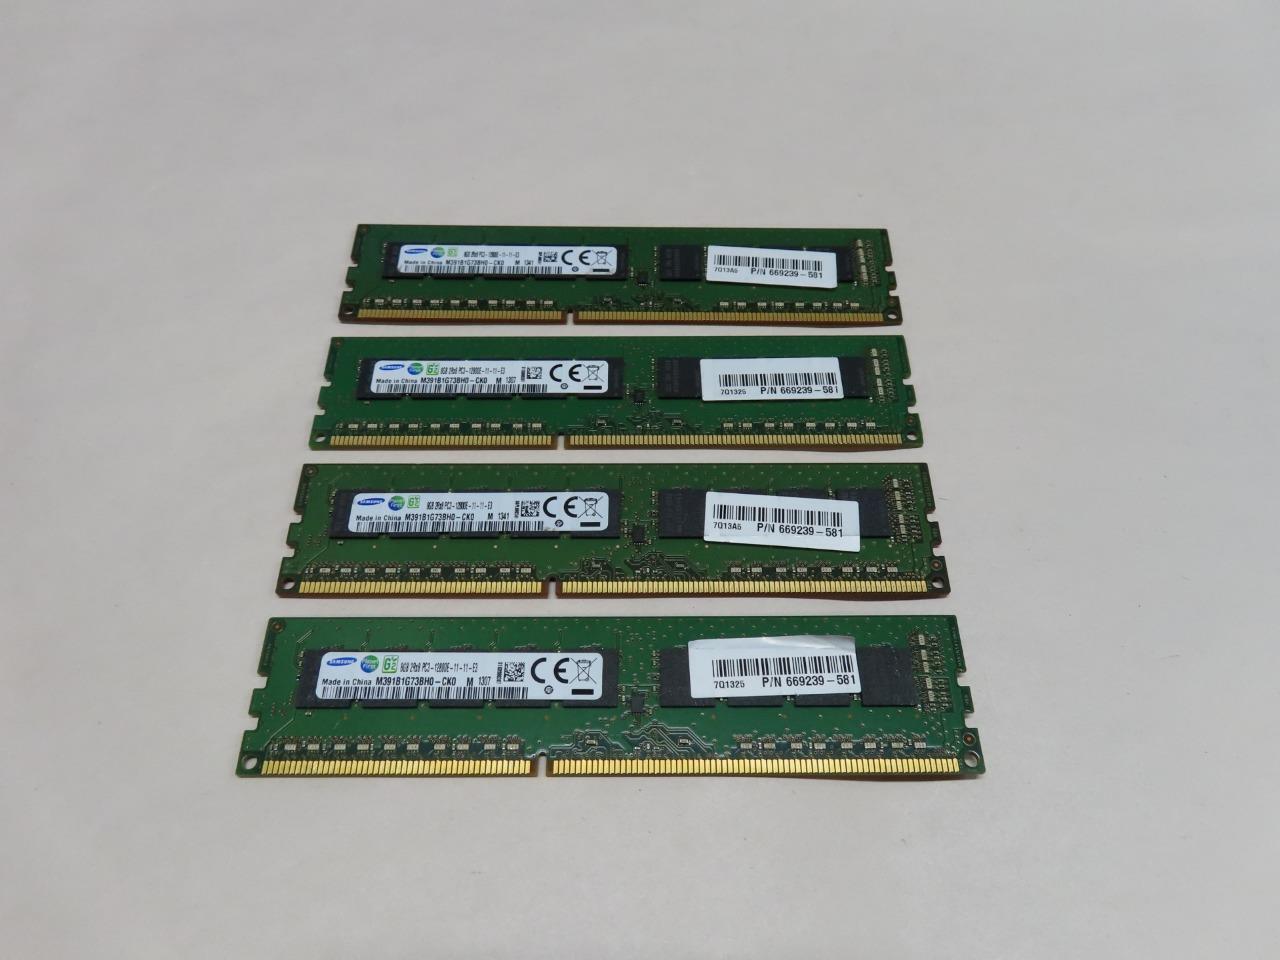 32GB (4X 8GB) SAMSUNG HP 669239-581 2RX8 PC3L-12800E DDR3 1600MHZ MEMORY